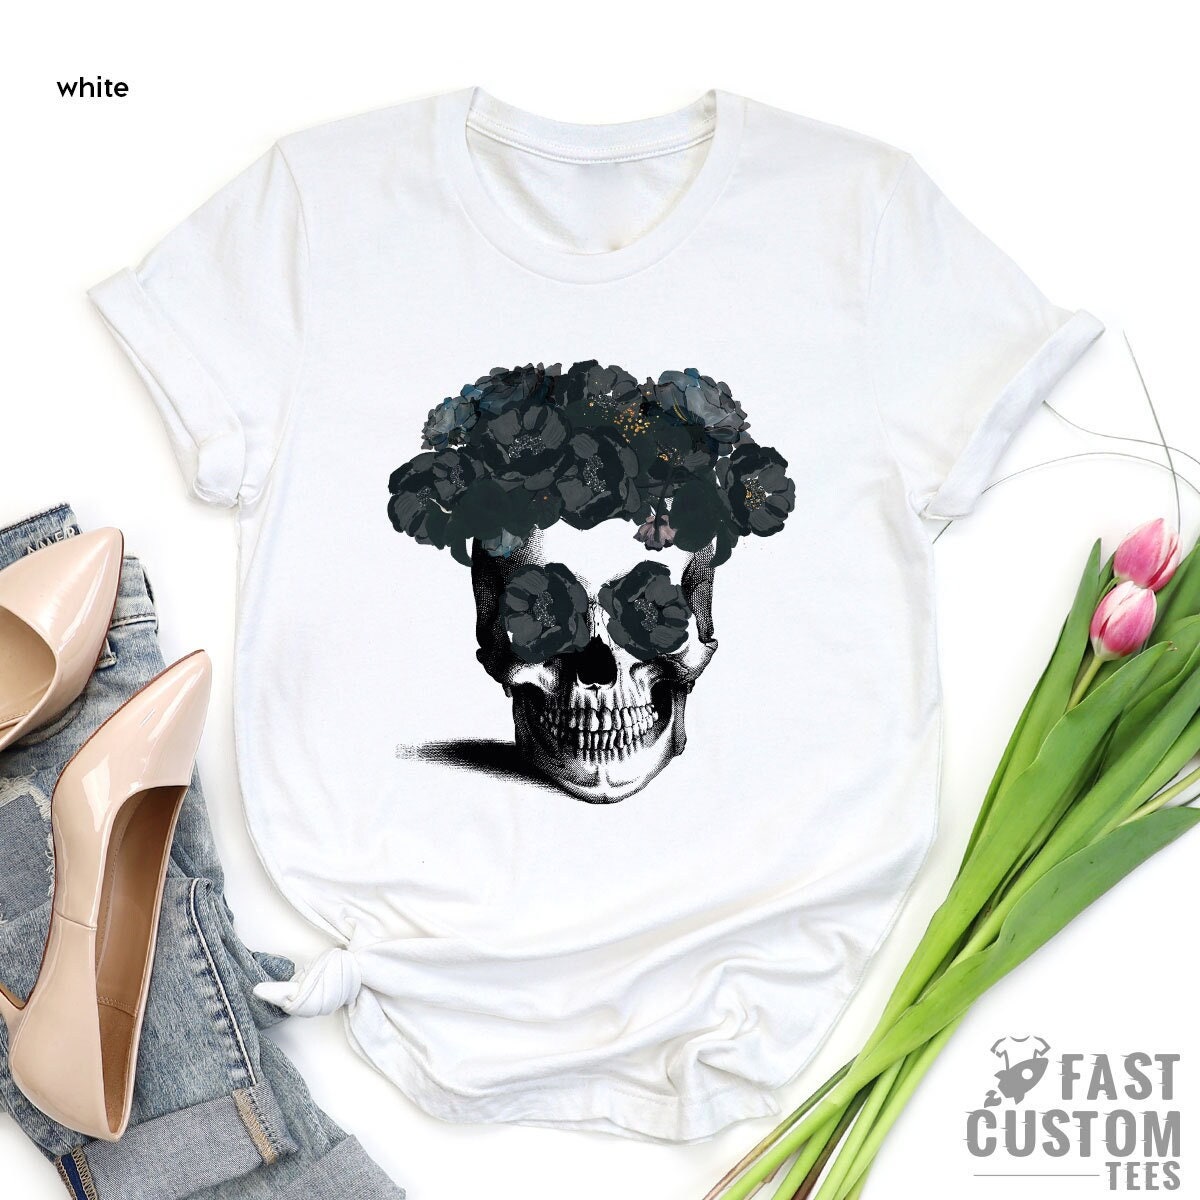 Halloween Shirt, Funny Skull Shirt, Skull Graphic T-Shirt, Gifts For Halloween, Flower Shirt, Floral Tshirt, Gothic Shirt, Fall Shirts - Fastdeliverytees.com